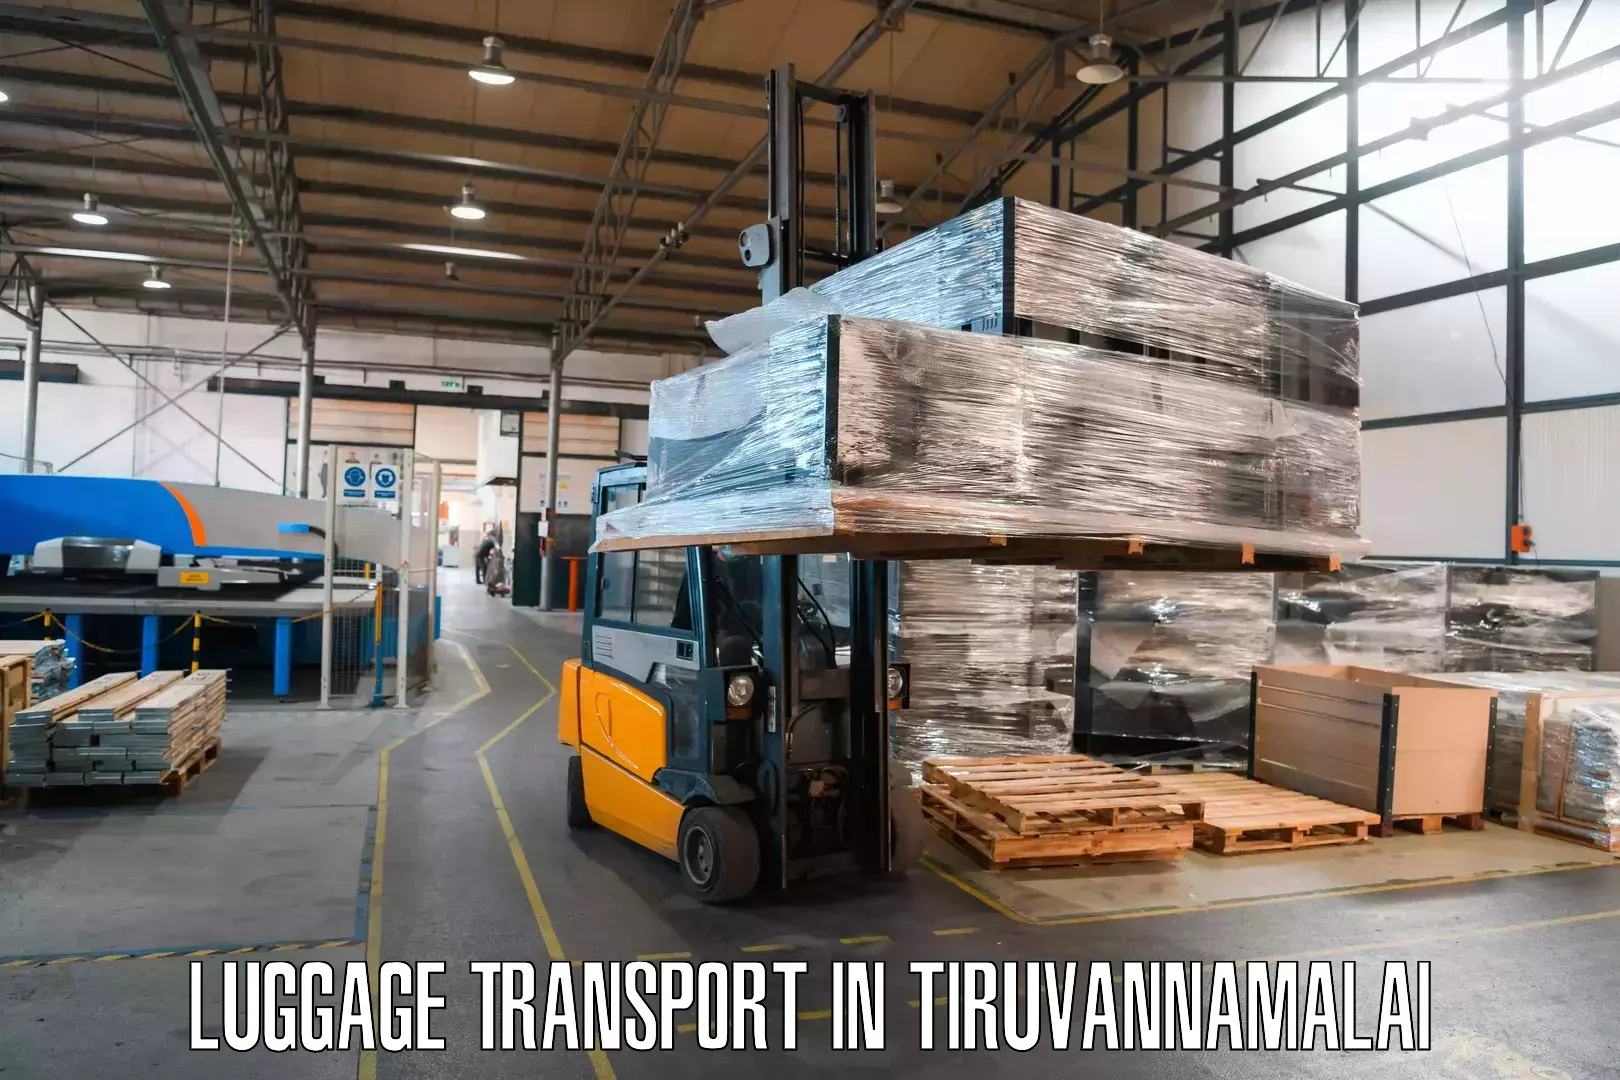 Luggage transport deals in Tiruvannamalai